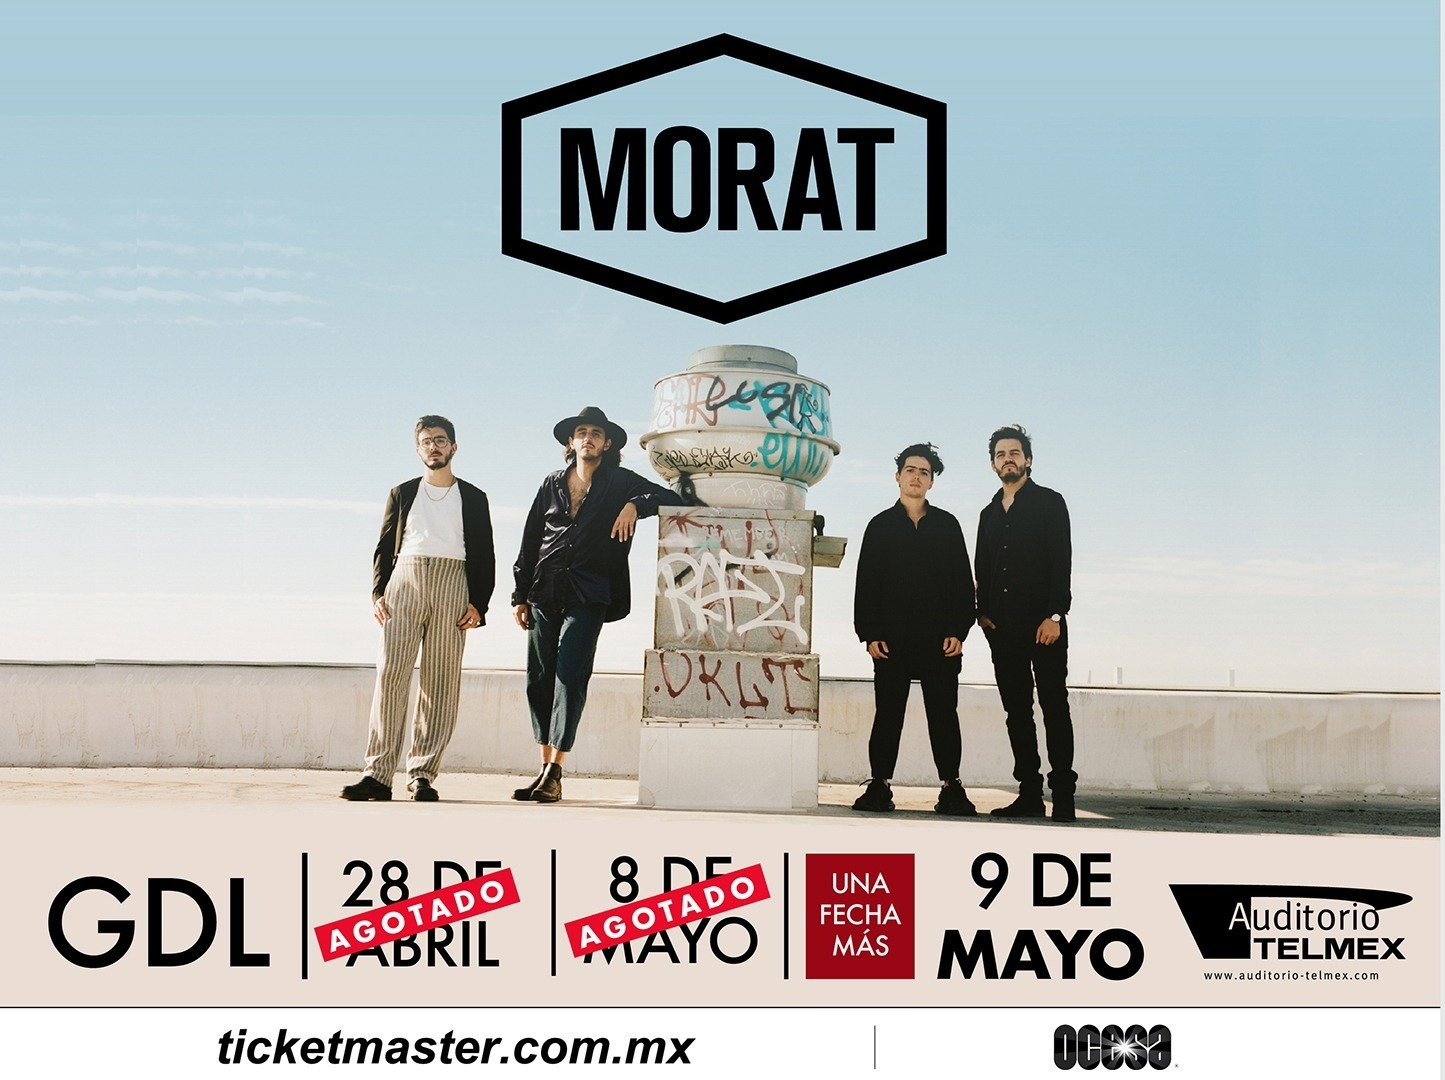 MORAT El fenómeno musical arrasa en Guadalajara